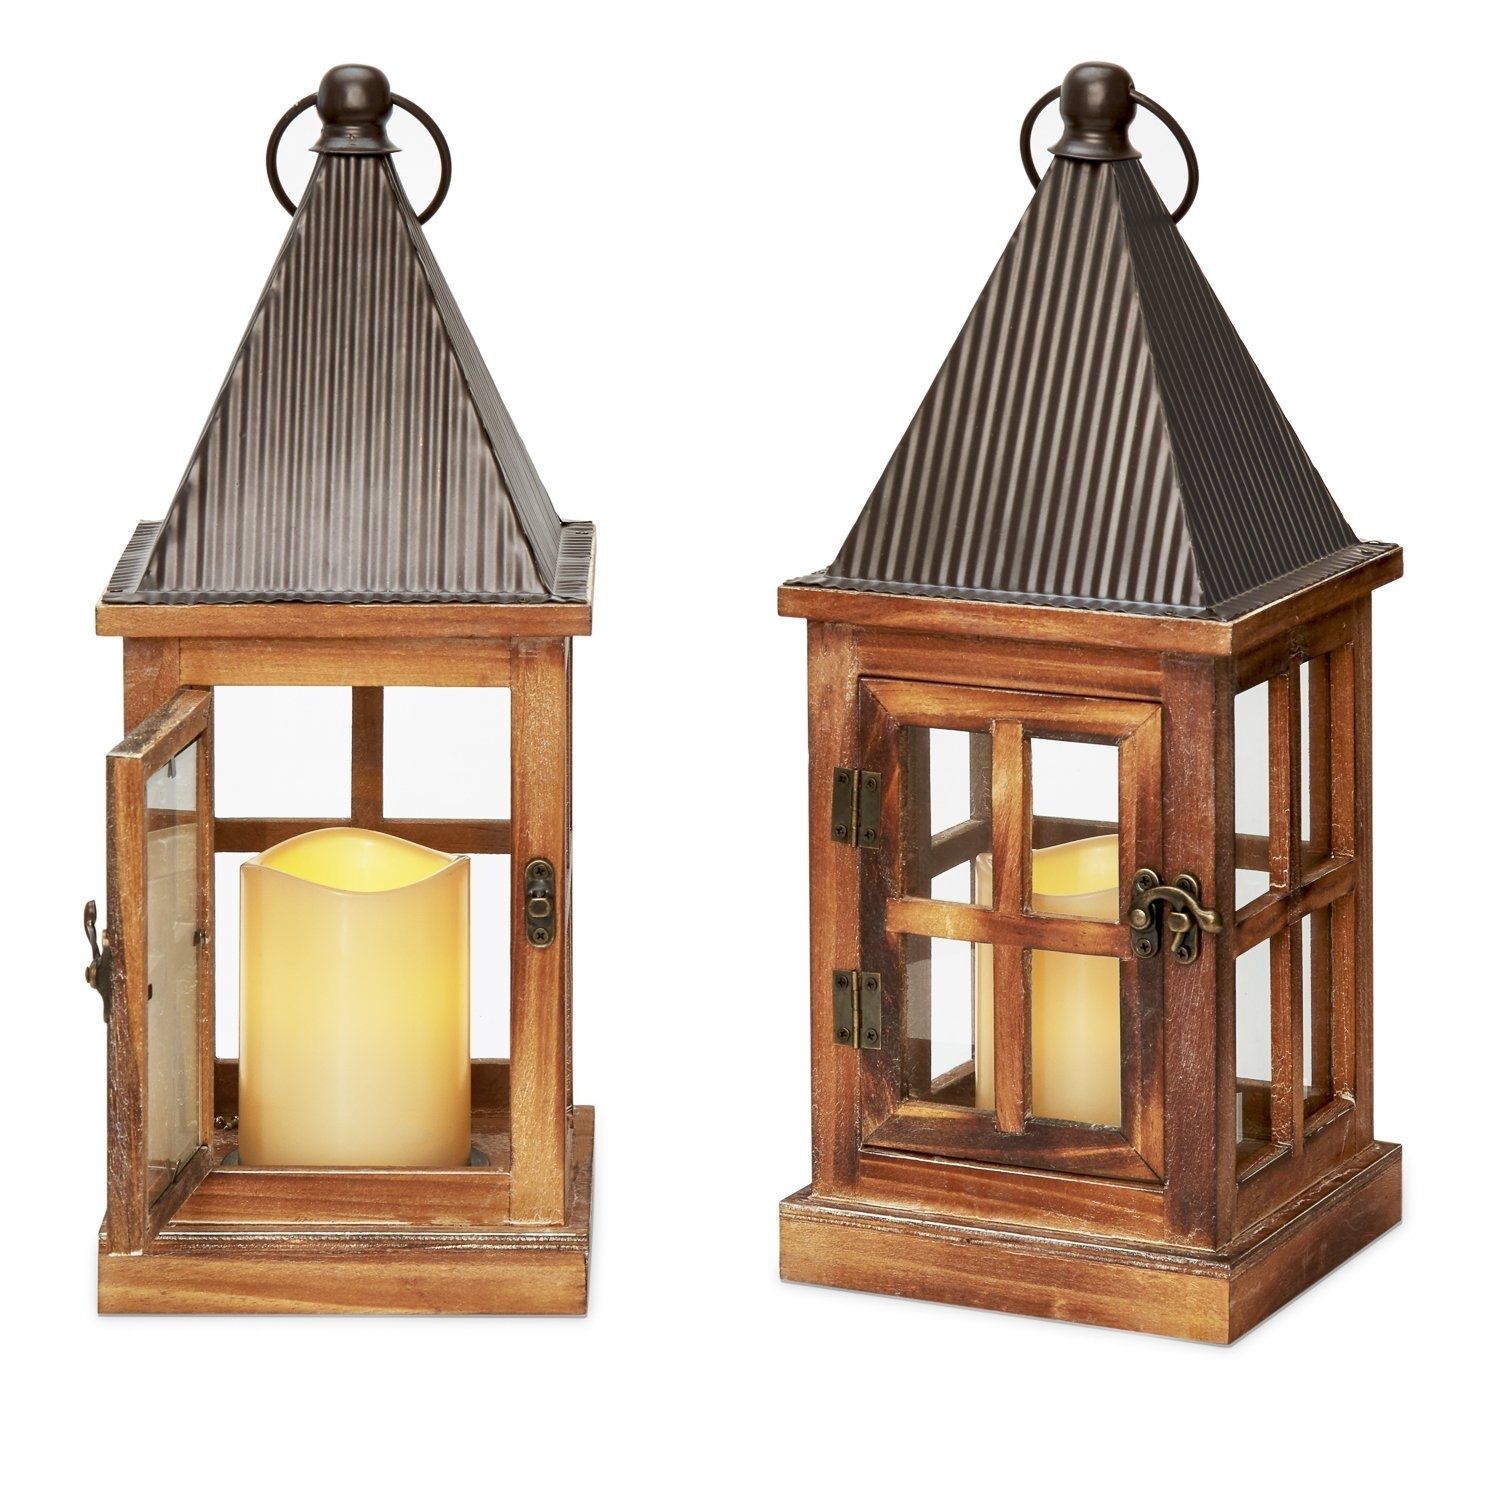 2 Warm White Led Ivory Resin Flameless Tin & Wood Lanterns, Rustic Pertaining To Resin Outdoor Lanterns (View 11 of 20)